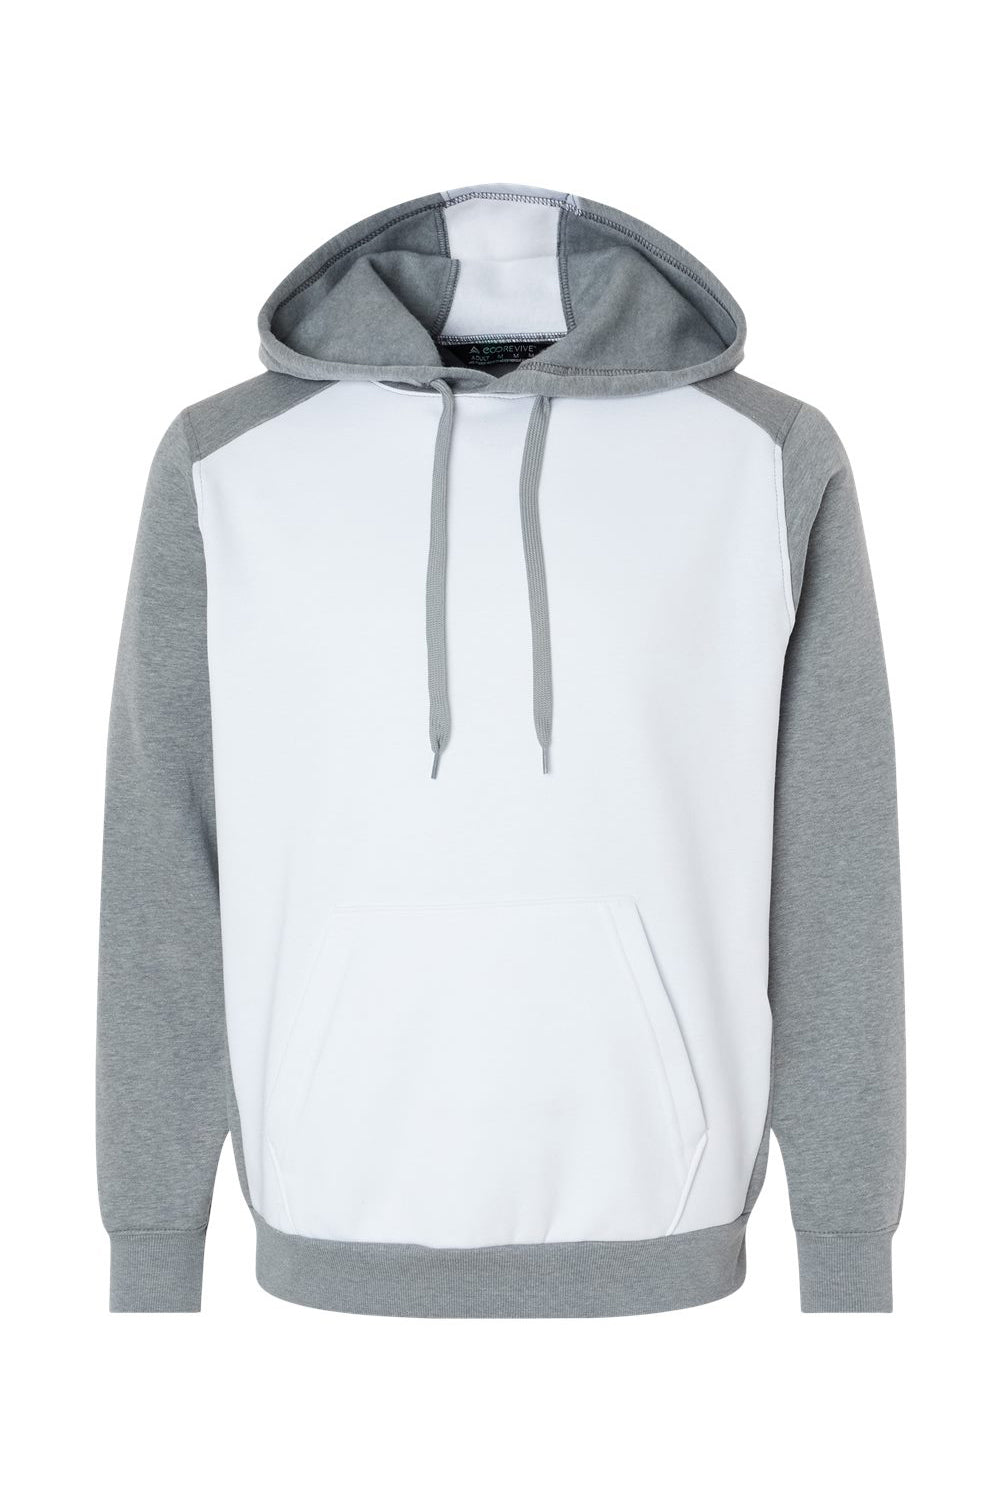 Augusta Sportswear 6865 Mens Eco Revive 3 Season Fleece Hooded Sweatshirt Hoodie White/Heather Grey Flat Front